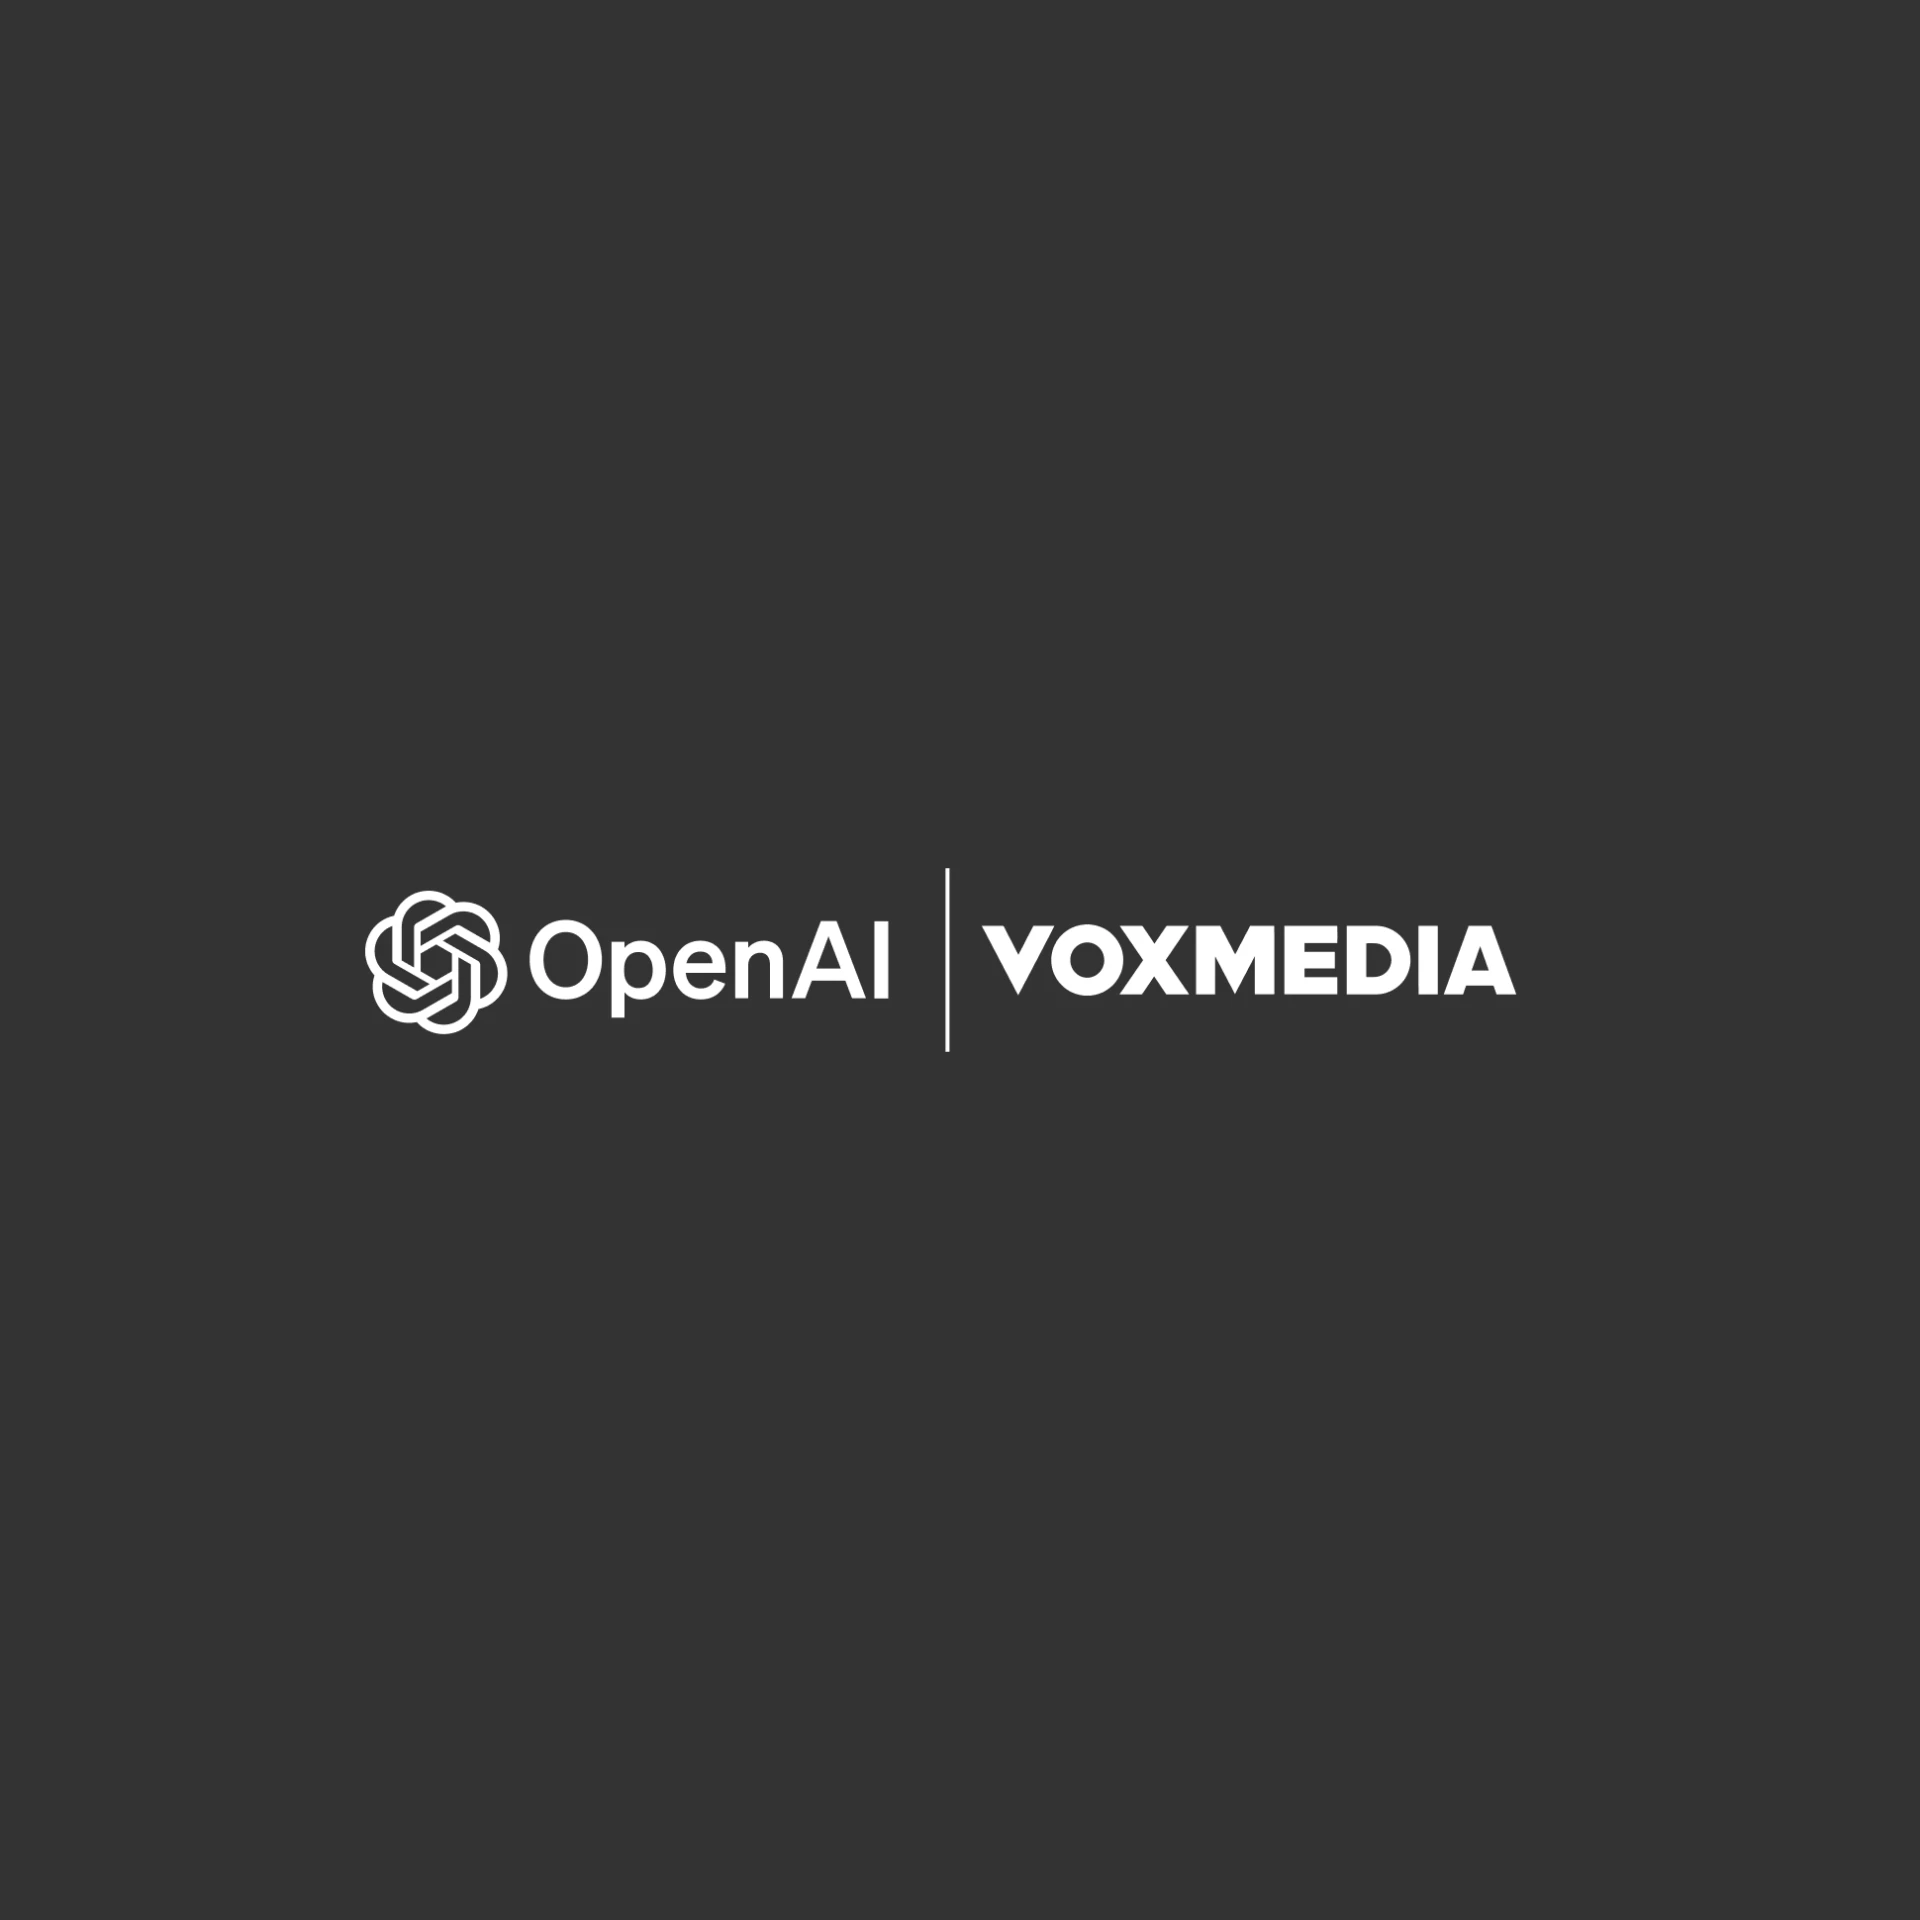 OpenAI和Vox Media的标志以白色显示在深灰色背景上。